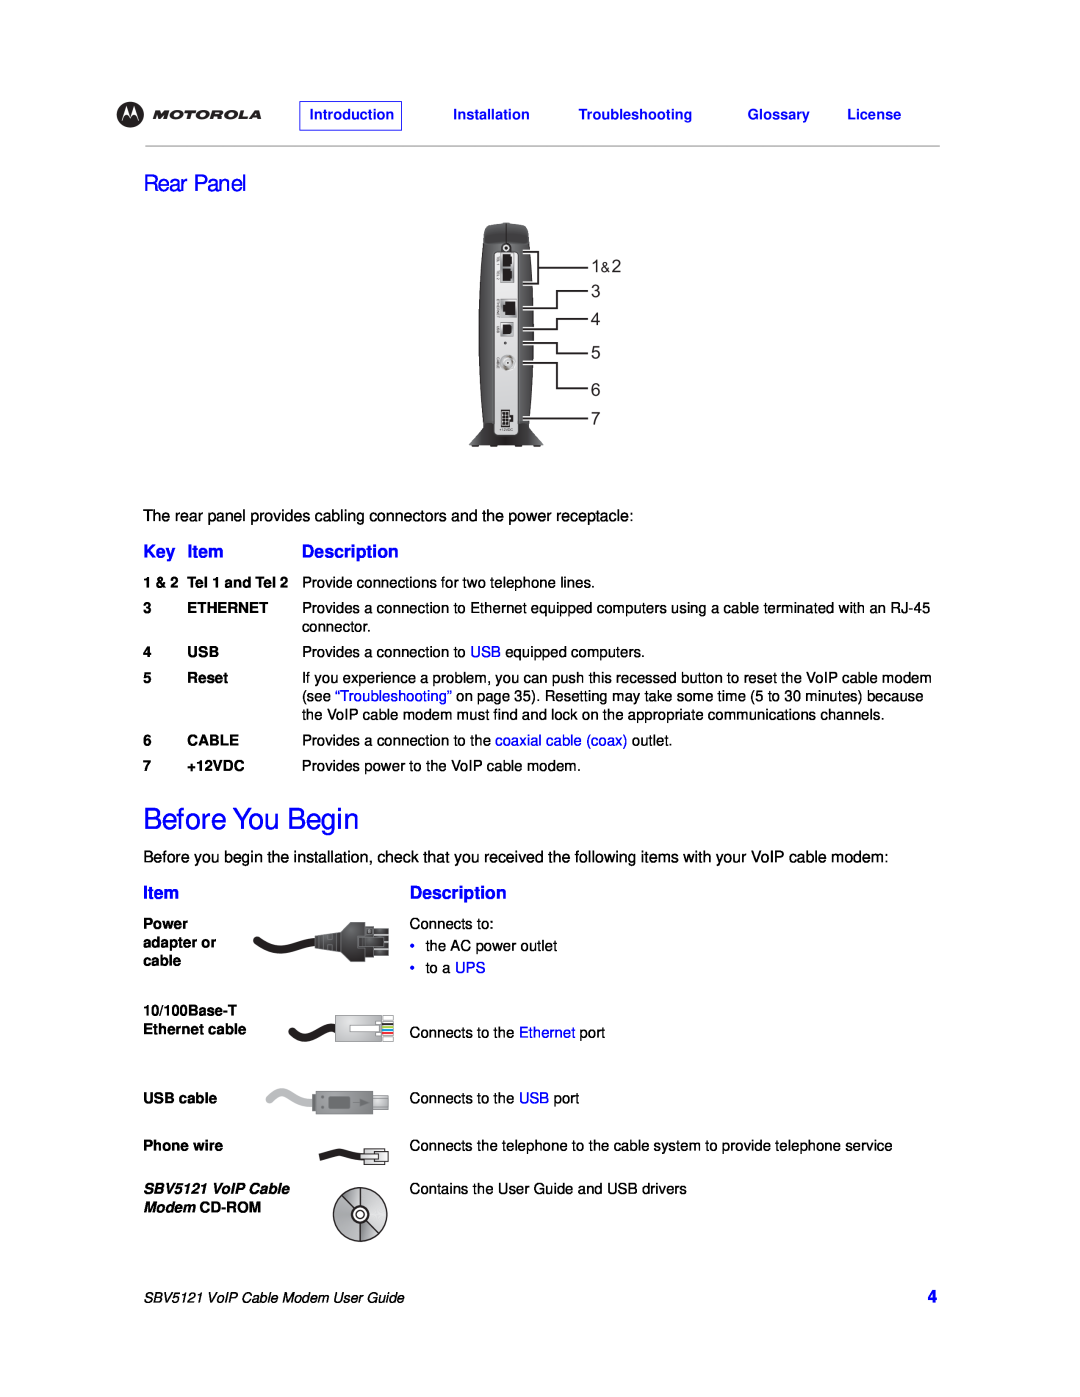 Nikon SBV5121 manual Before You Begin, Rear Panel, Key Item, Description, Introduction, 1 & 2 Tel 1 and Tel 